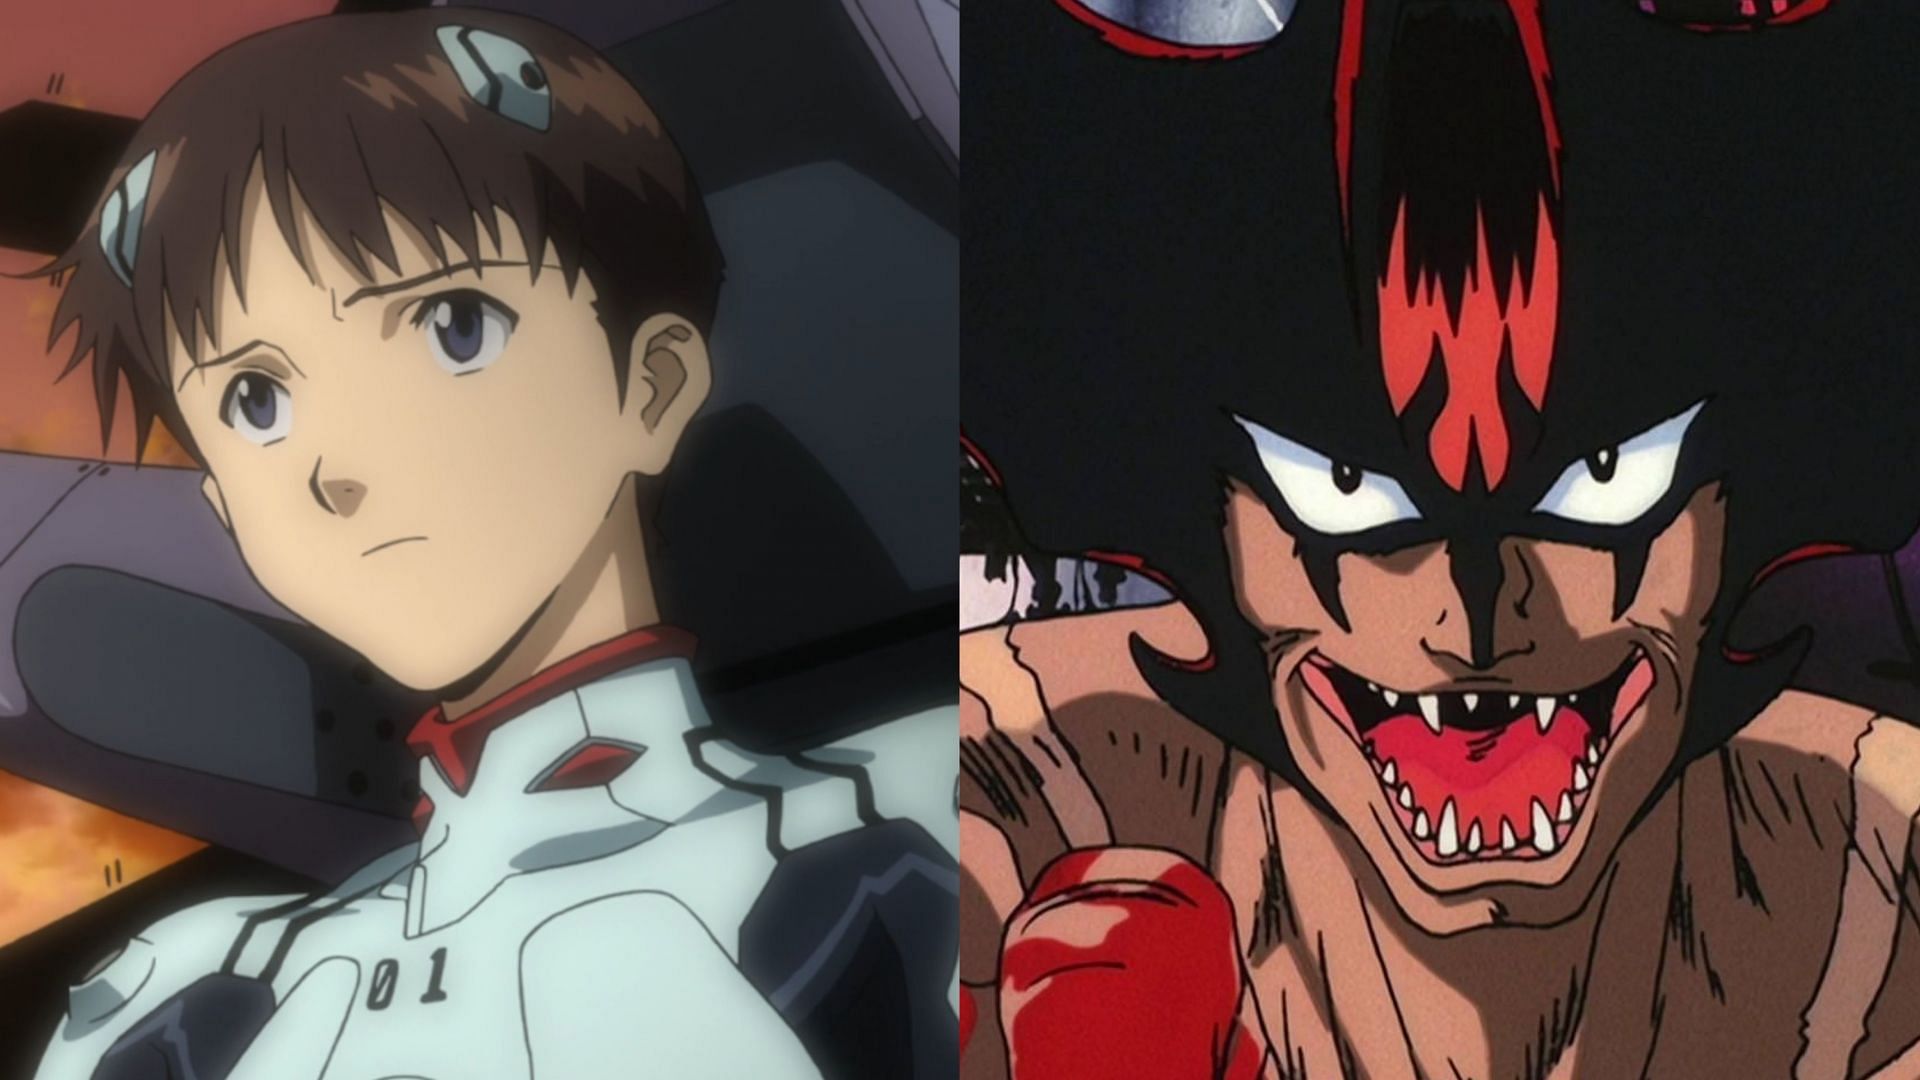 Shinji and Akira (Image via Studio Khara and Toei Animation)